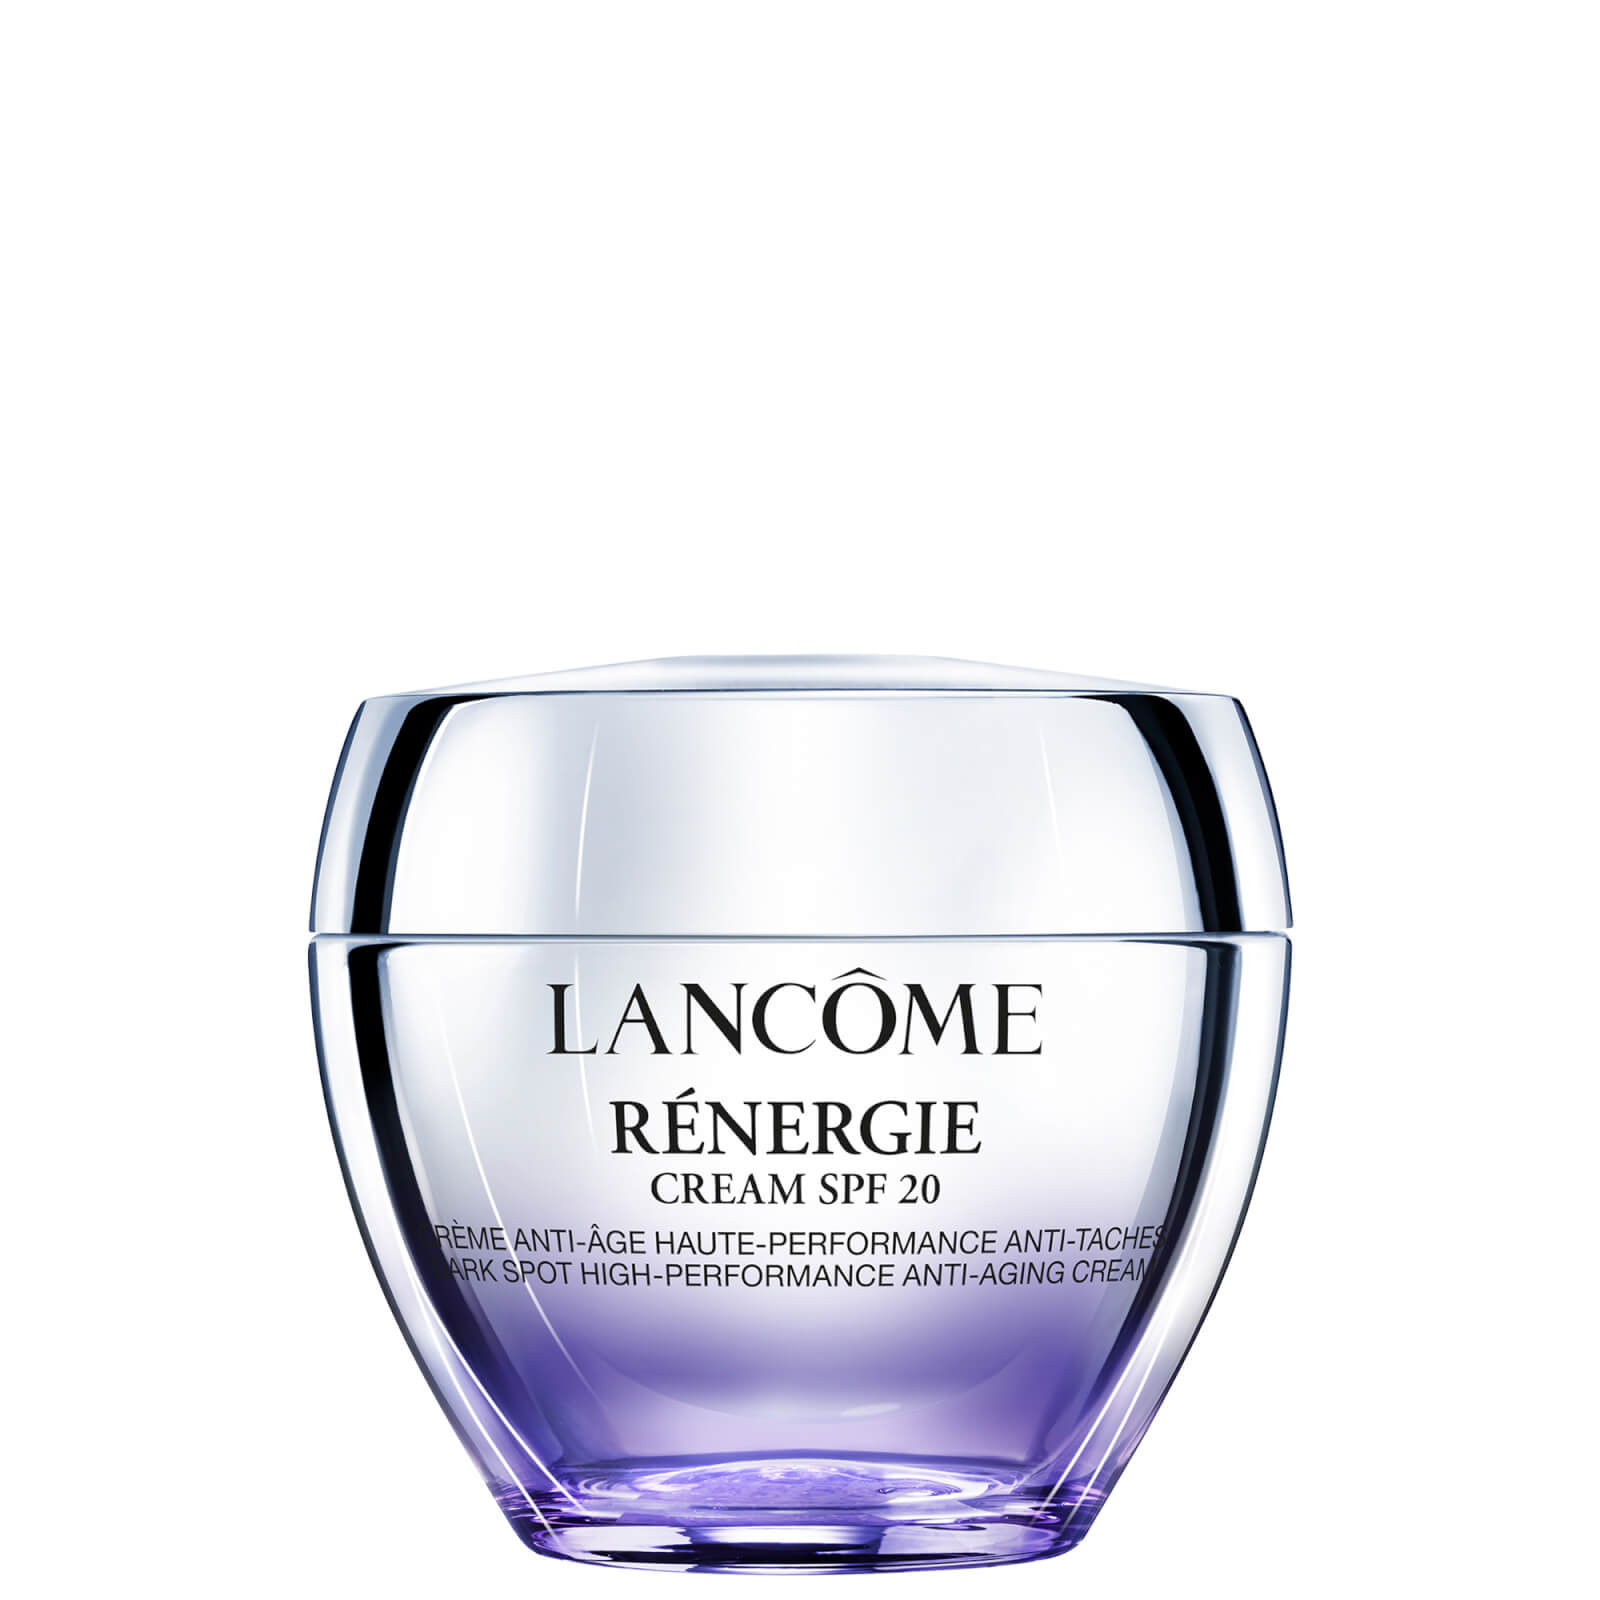 Photos - Sun Skin Care Lancome Lancôme Rénergie SPF 20 Cream 50ml LE384900 